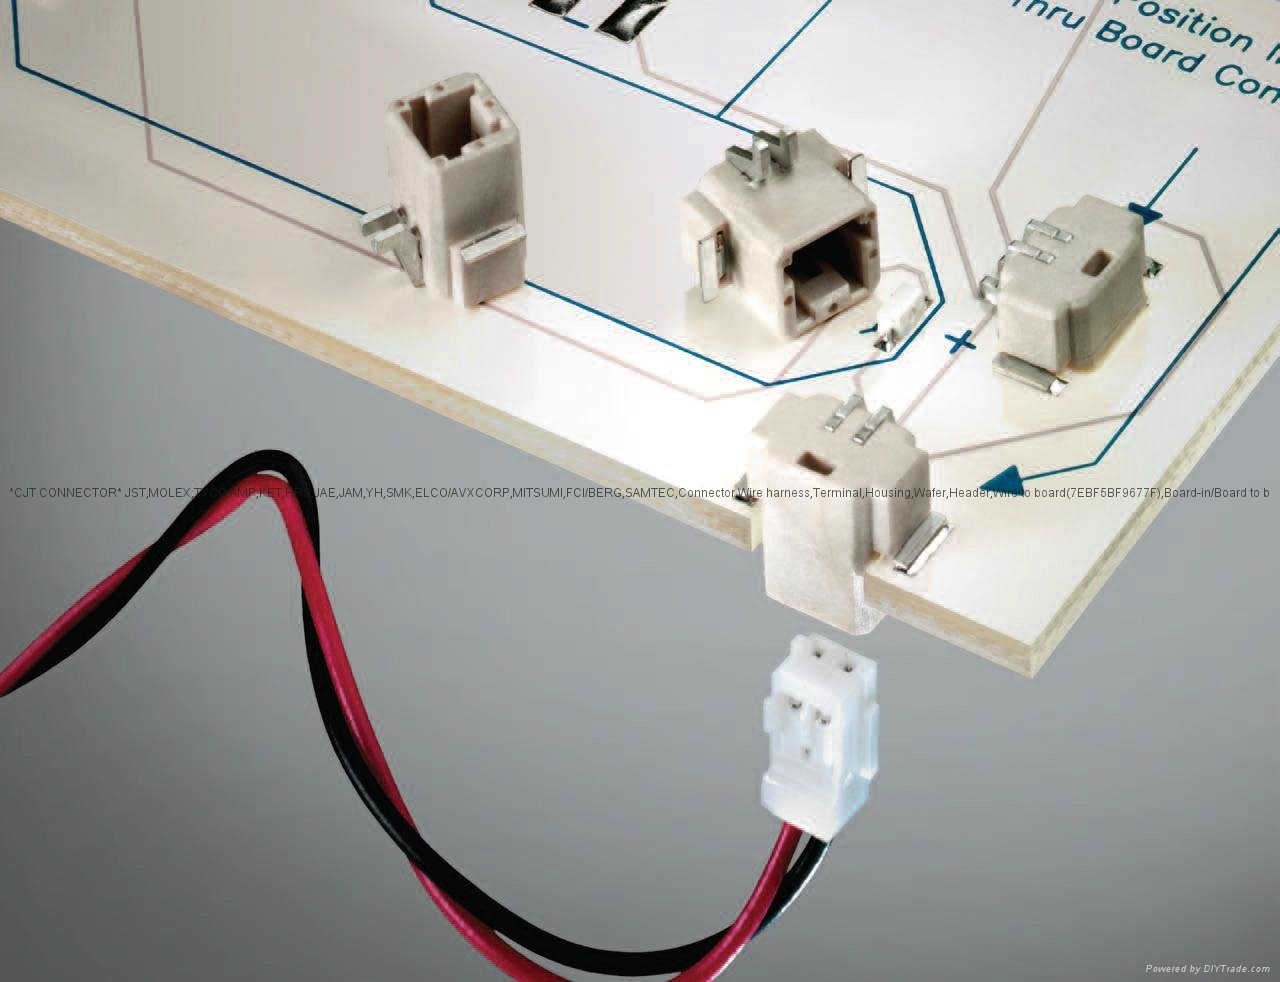 1.50mm pitch CJTconn LED Inverted SMT Thru Board Connector